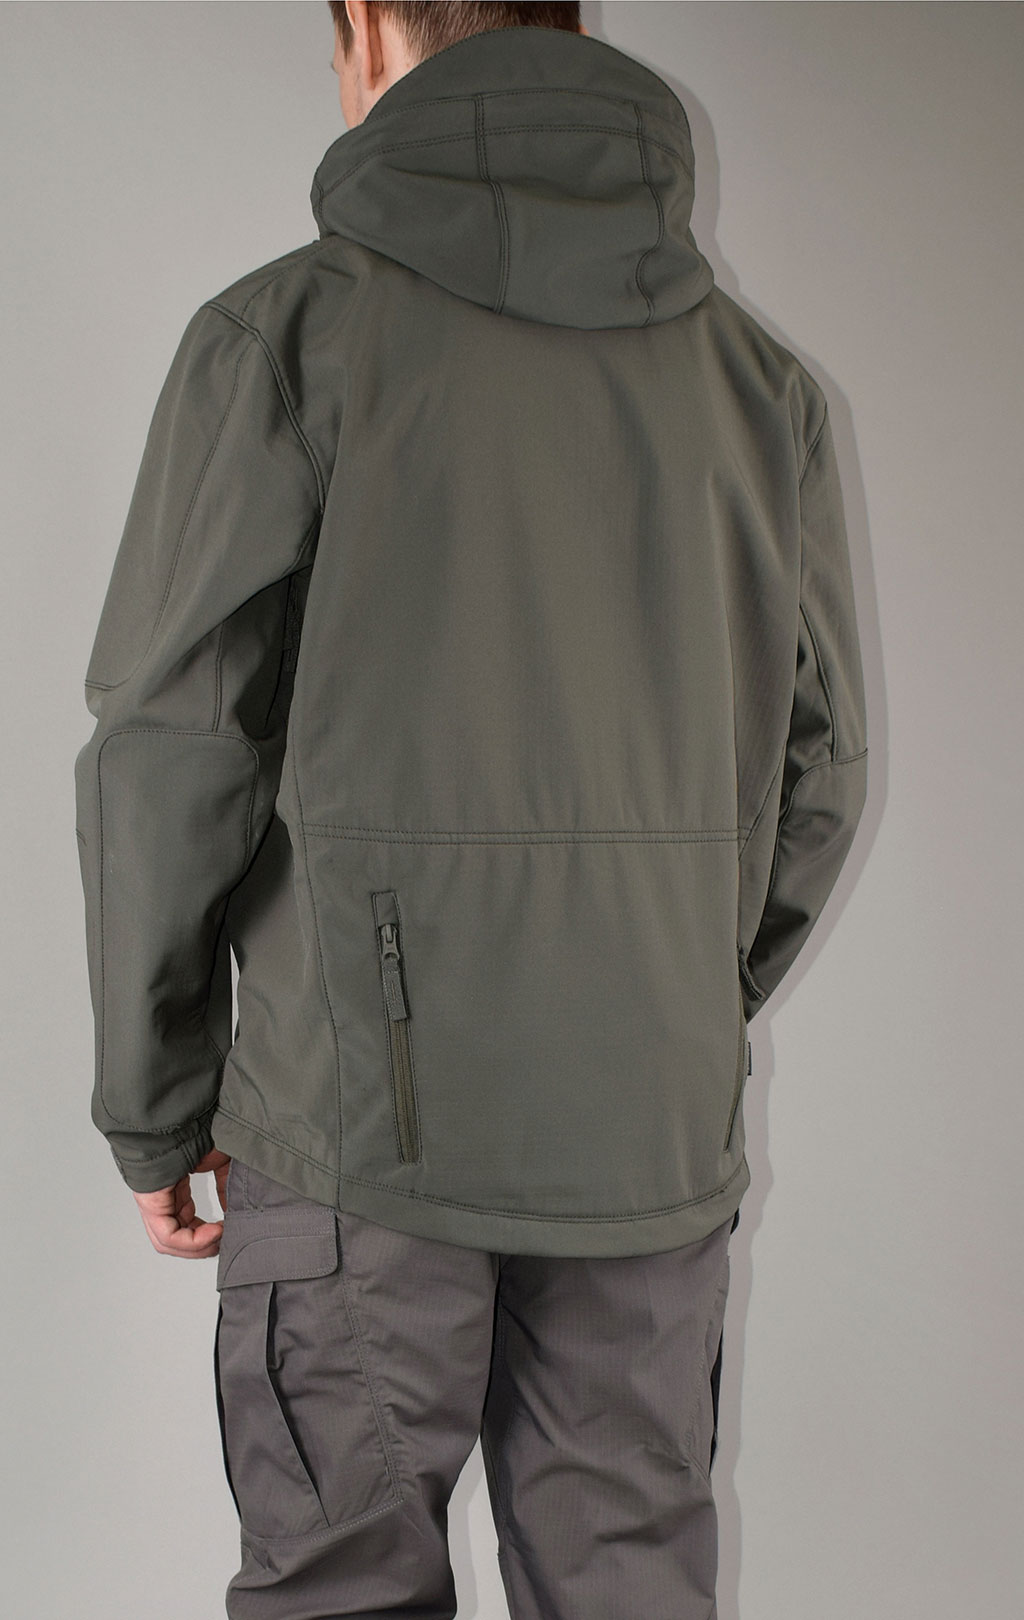 Куртка тактическая softshell Pentagon мембрана ARTAXES ESCAPE Soft Shell grindle green 06G 08035 